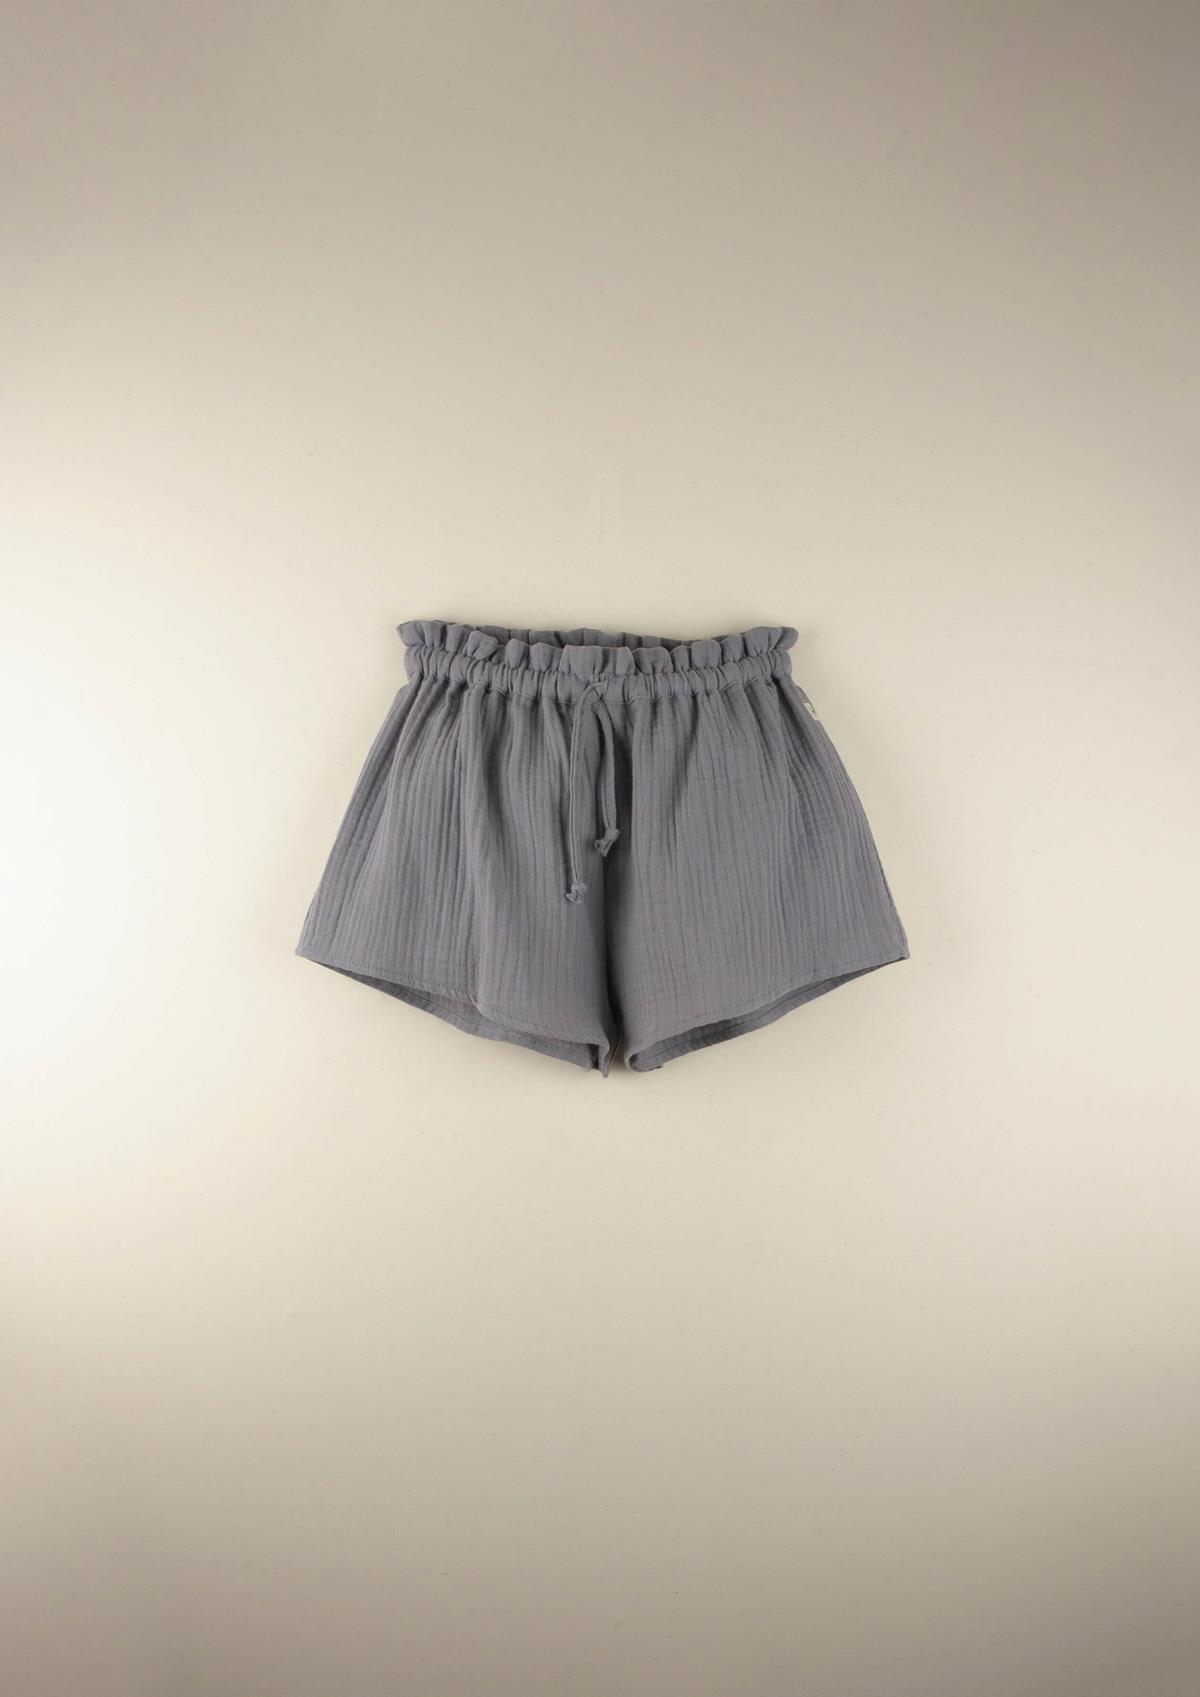 Mod.16.5 Greyish-blue loose organic shorts | SS22 Mod.16.5 Greyish-blue loose organic shorts | 1